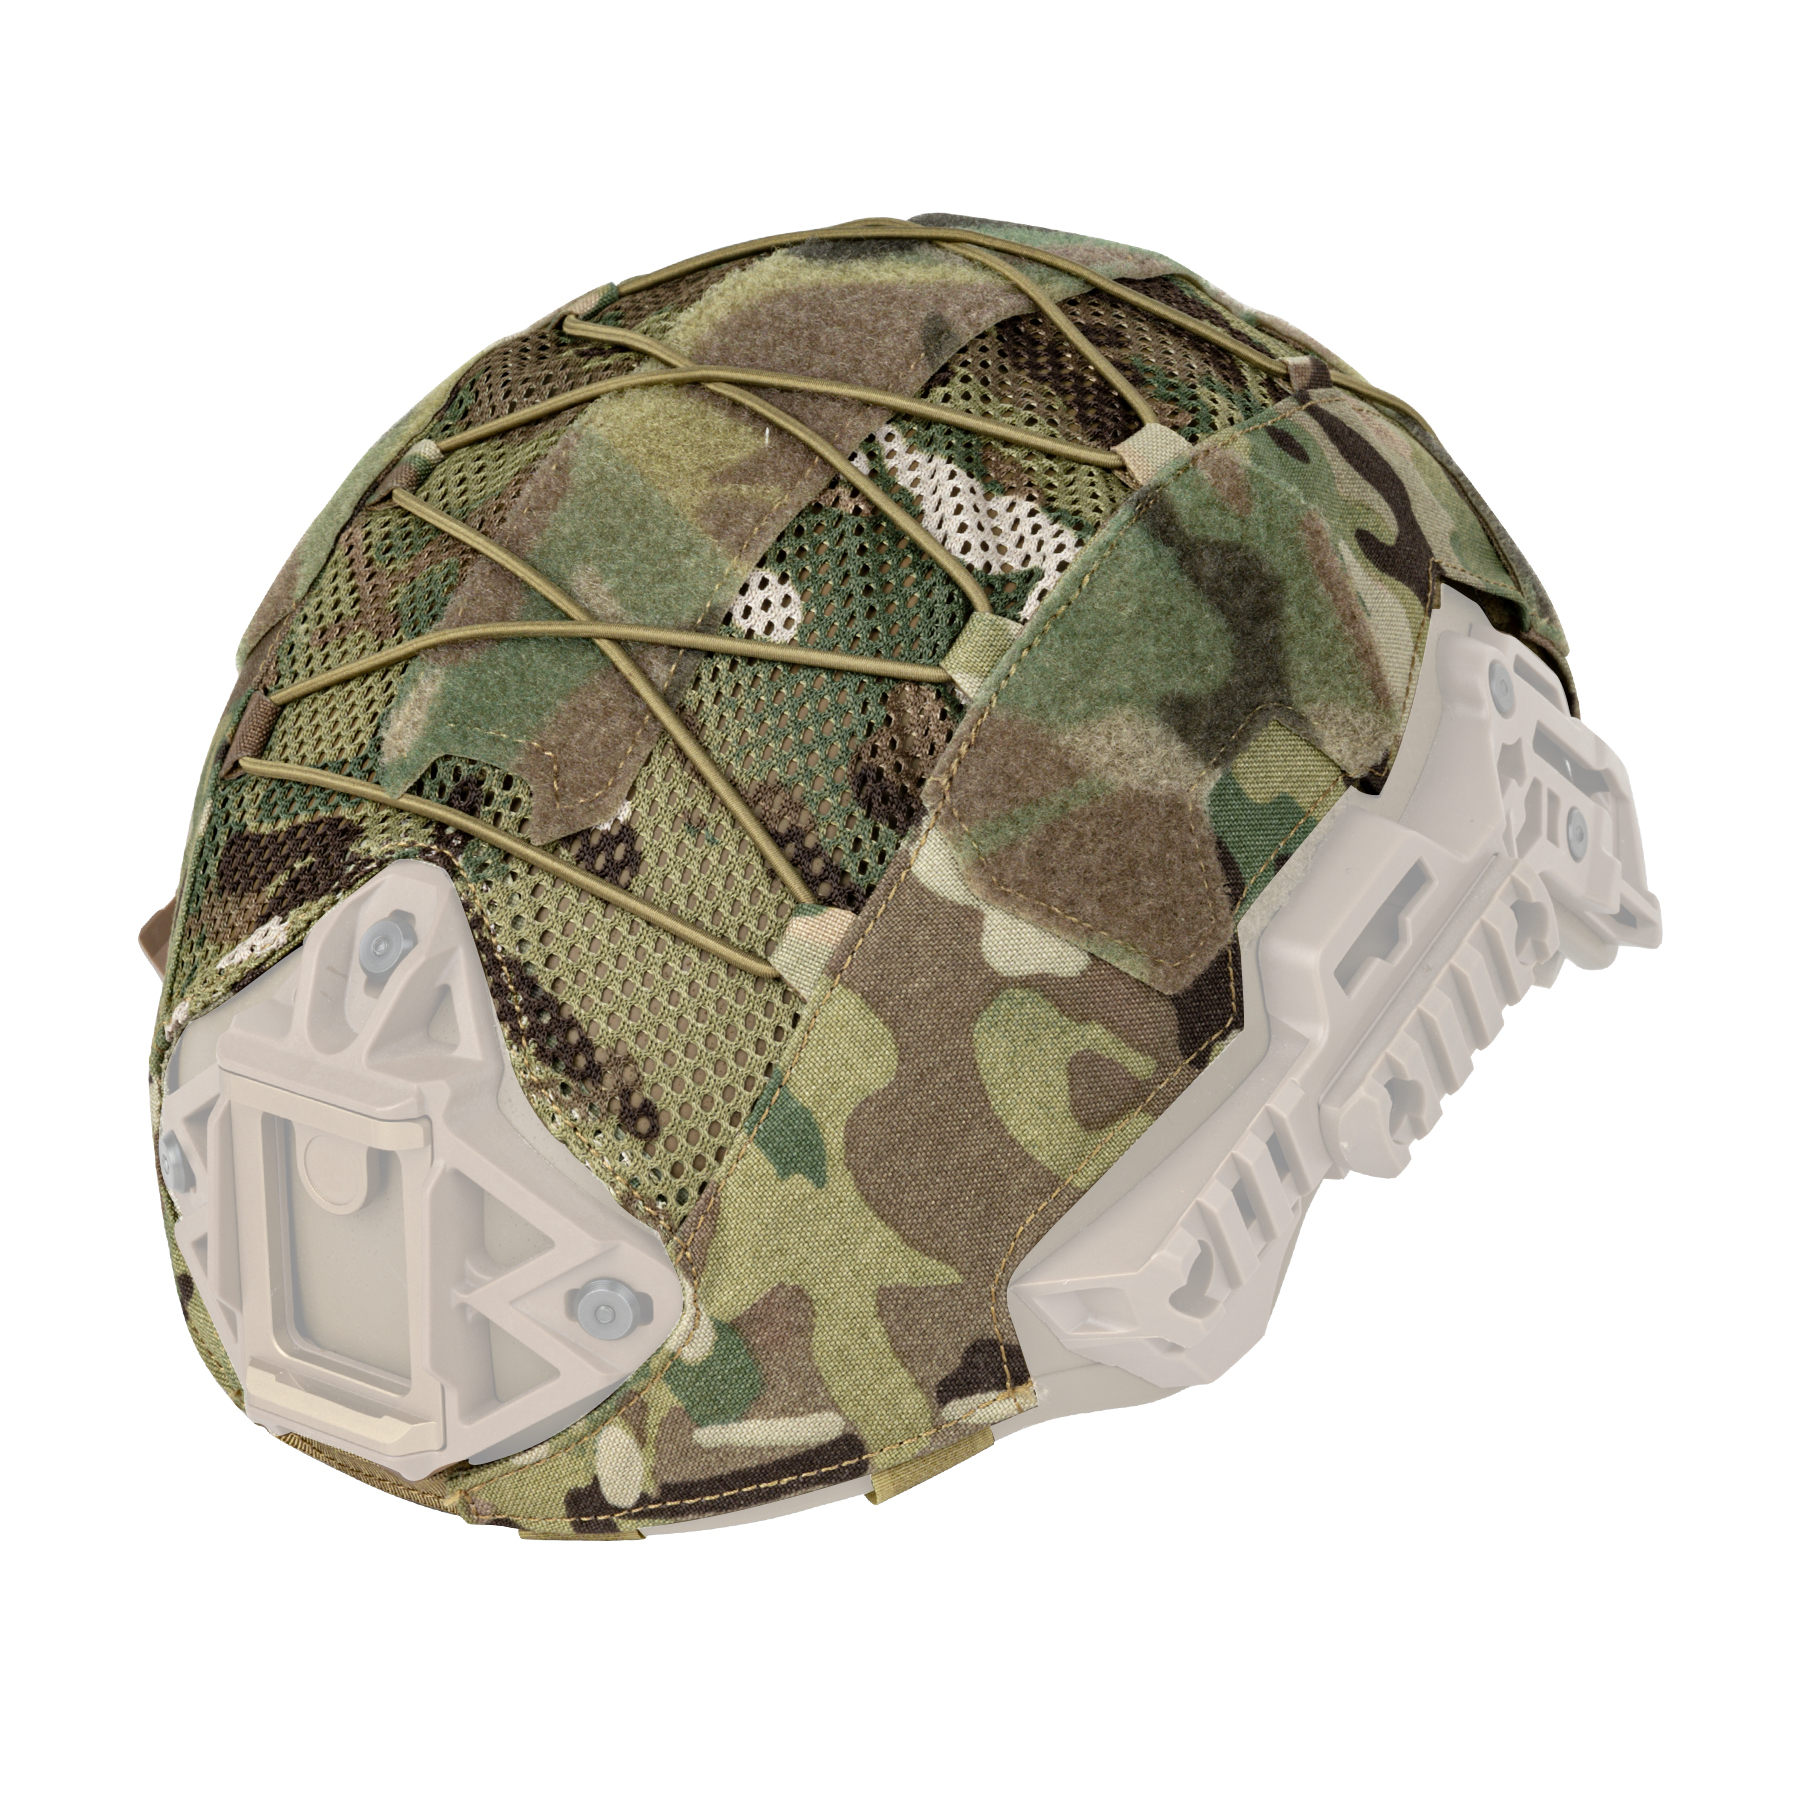 TOPTACPRO Tactical Helmet Cover For Wendy Helmet in Size M/L 500D Cordura Nylon 8802-IDOGEAR INDUSTRIAL